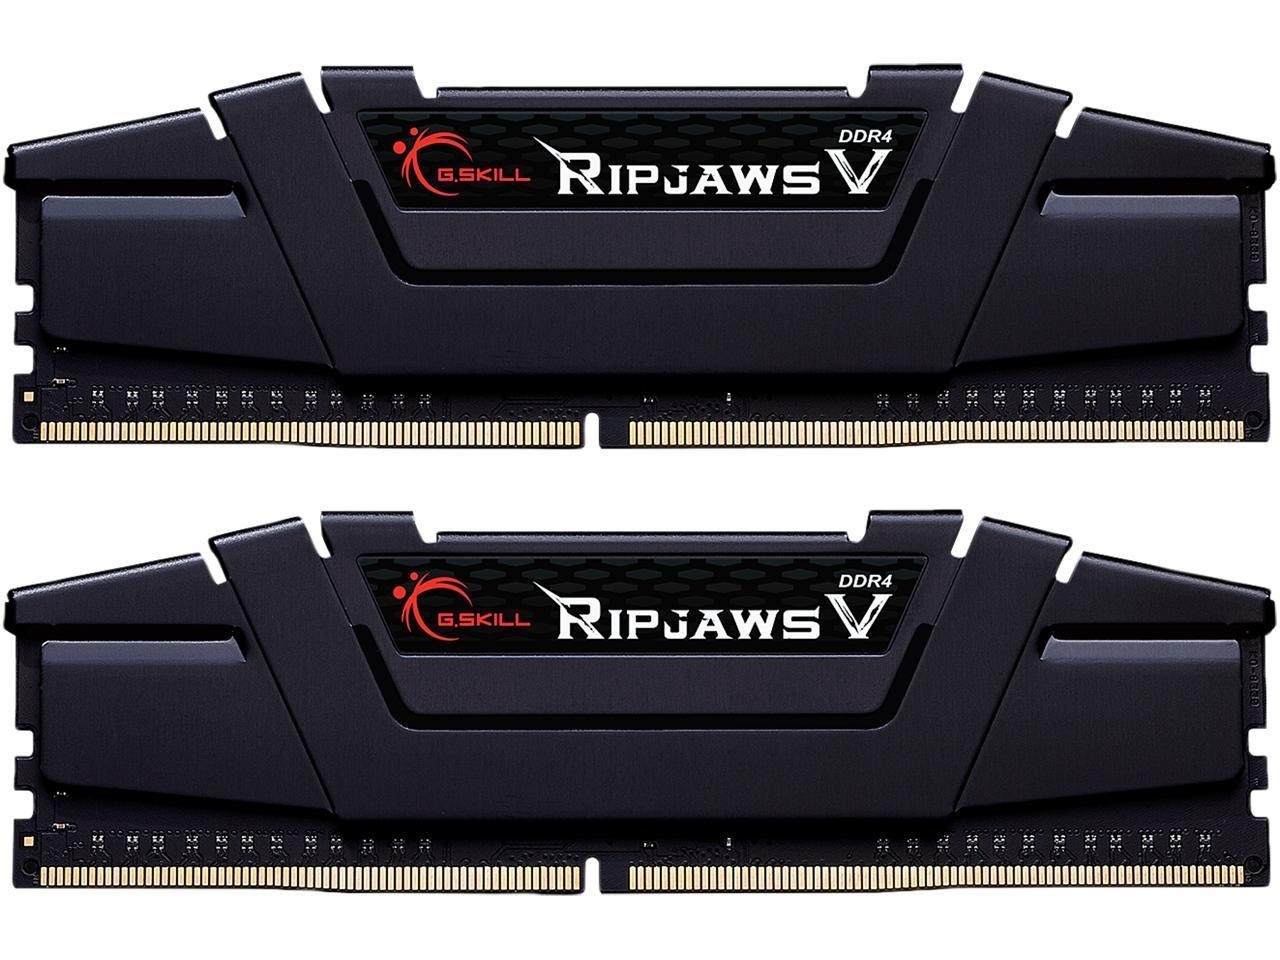 64GB (2x32GB) G.Skill RipJaws V Series DDR4 3600MHz CL18 RAM Desktop Memory Kit $141 + Free Shipping